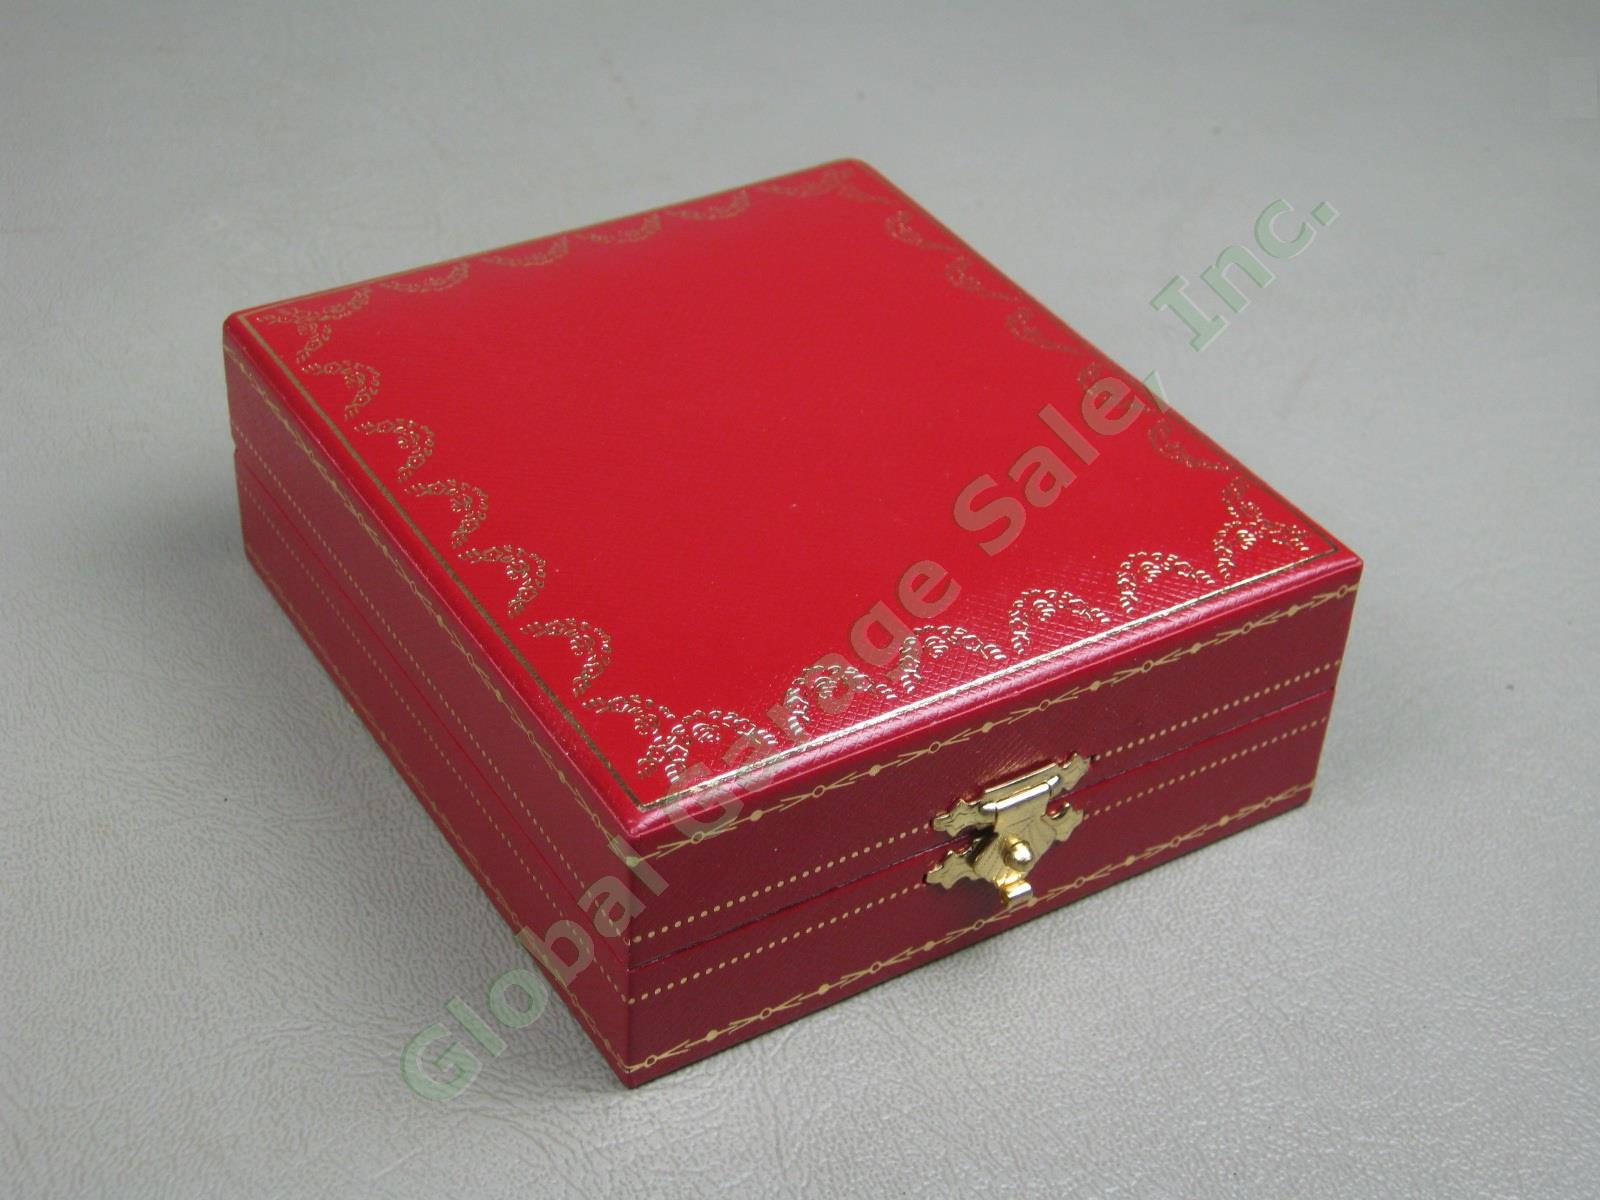 Cartier La Dona Gold Plated Travel Alarm Clock 2985 Brown Suede + Box/Paperwork 6